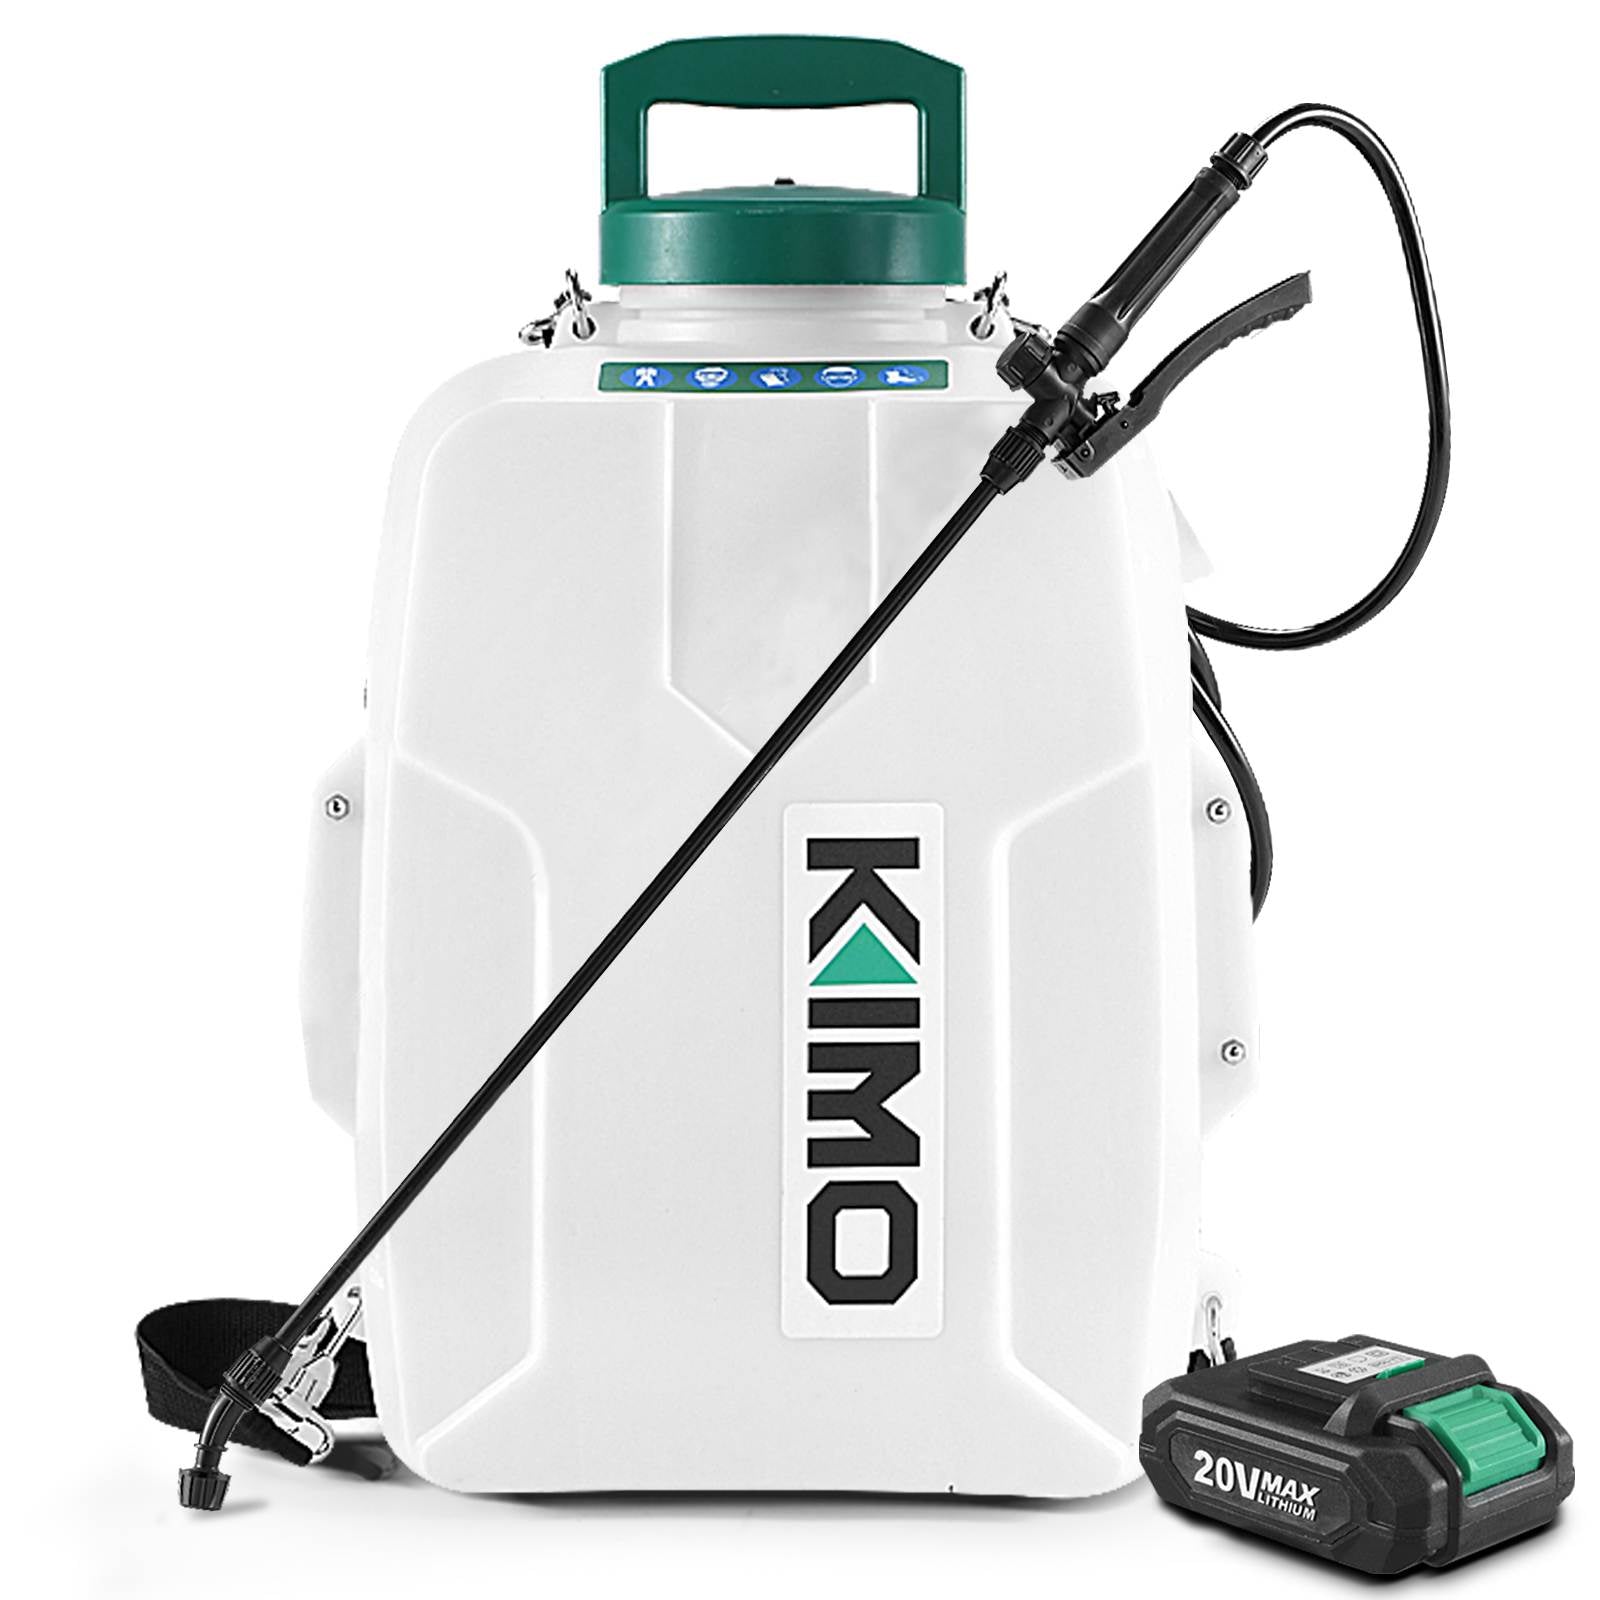 Battery Powered Backpack Sprayer Kimo